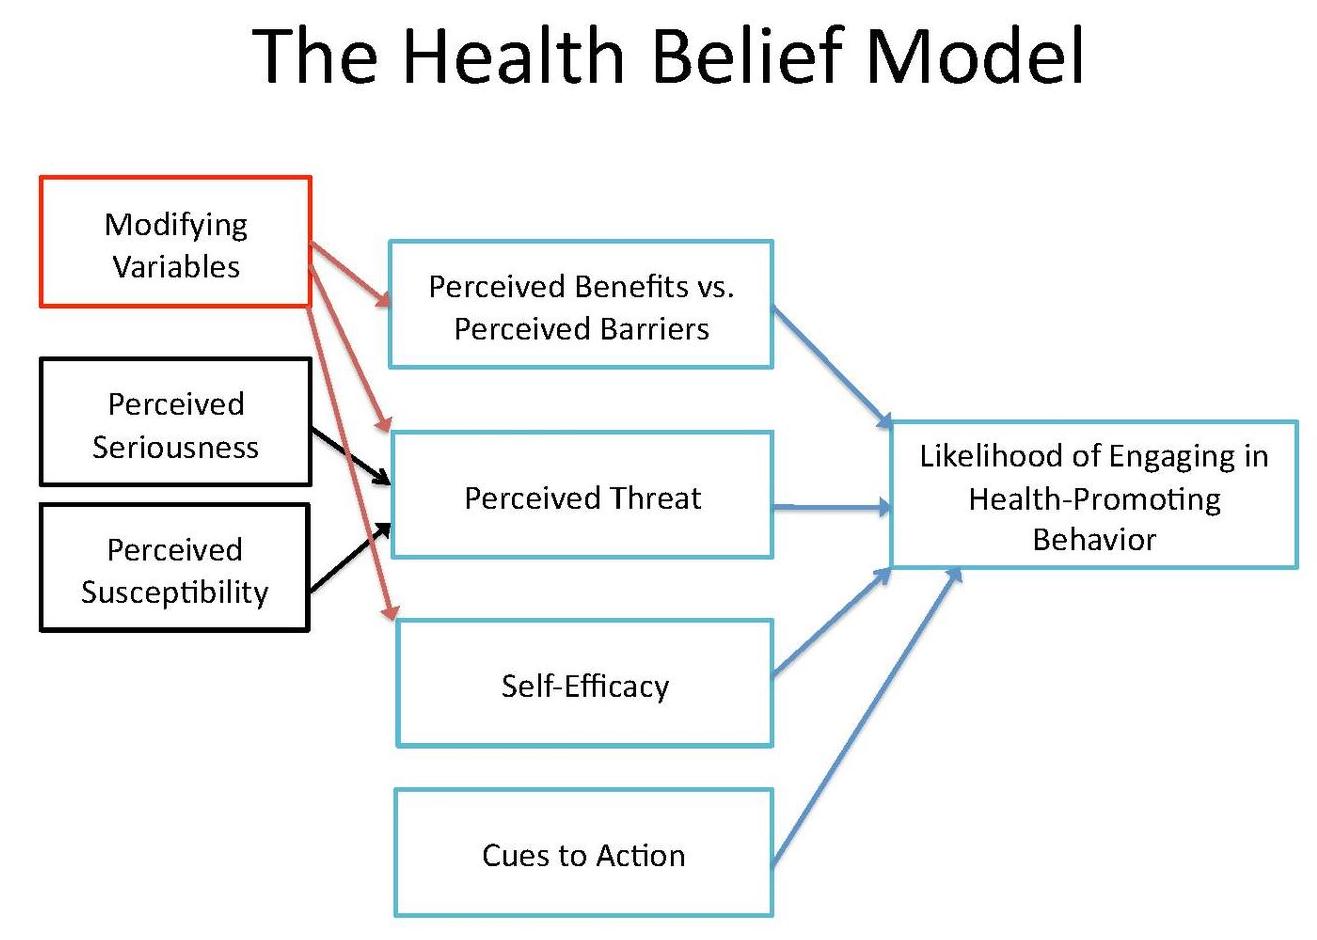 Health belief model. Source: http://bit.ly/2i9Lw0Ehbm.jpg